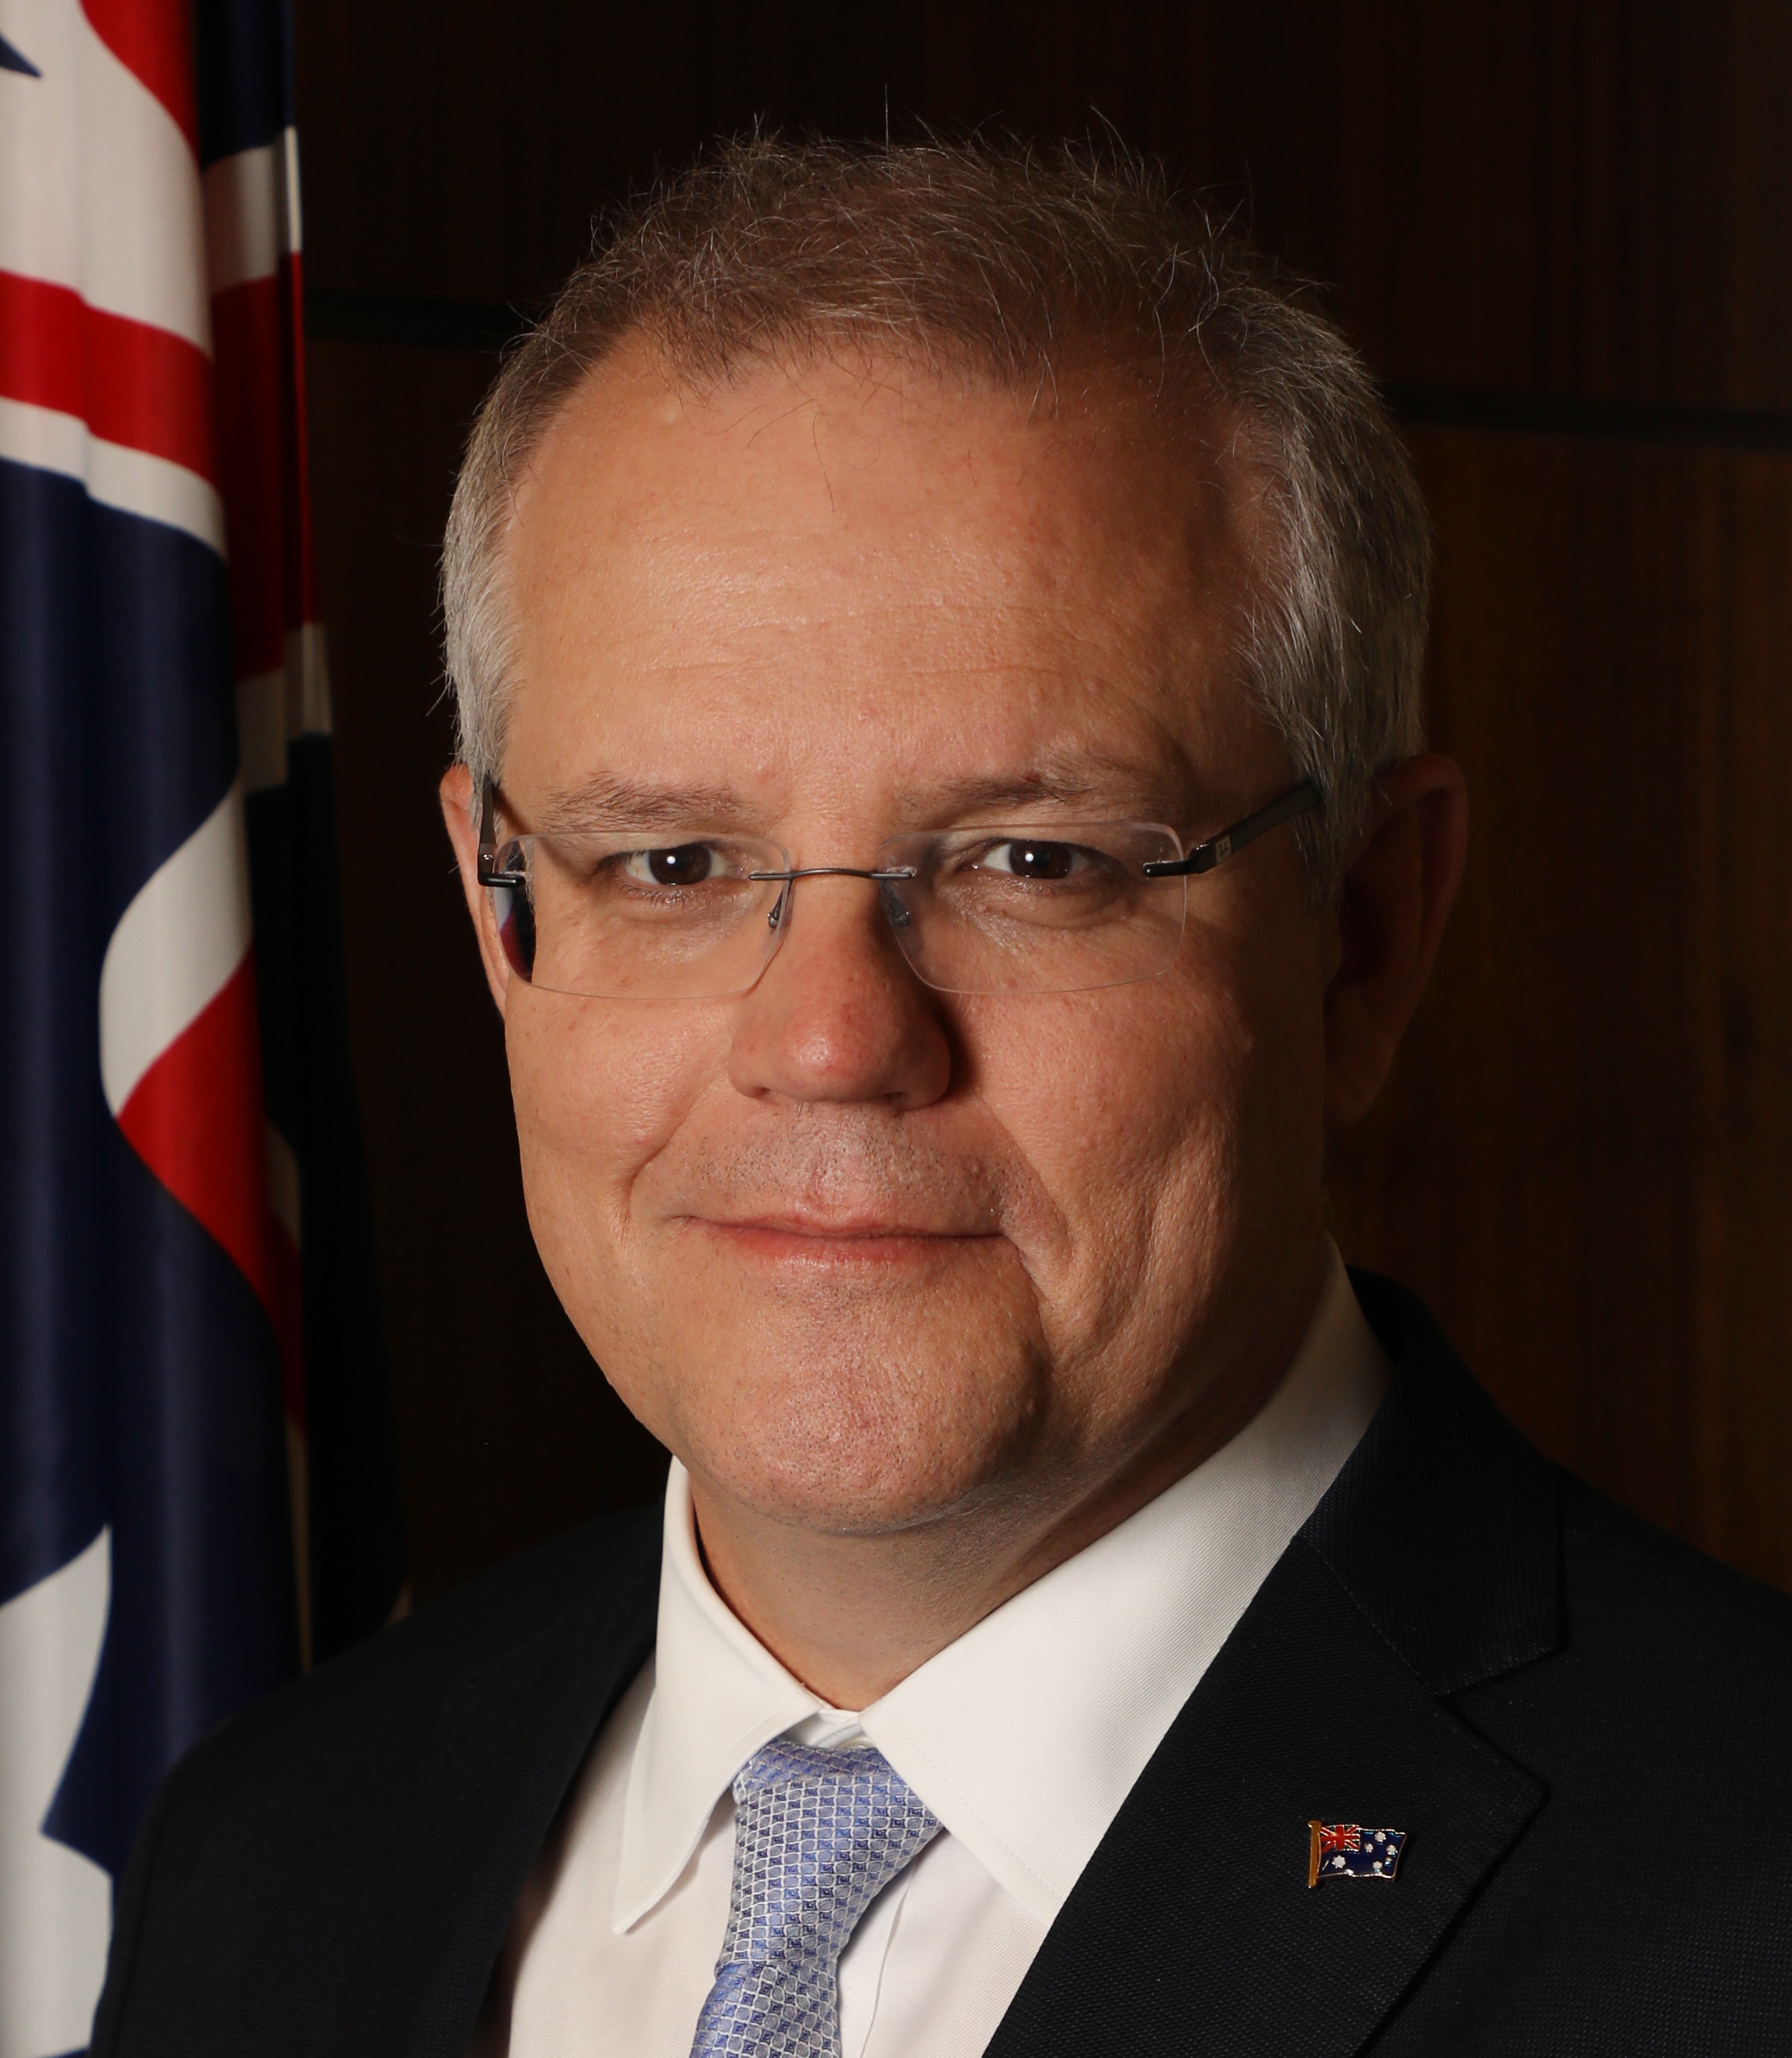 The Hon Scott Morrison MP, Prime Minister of Australia.